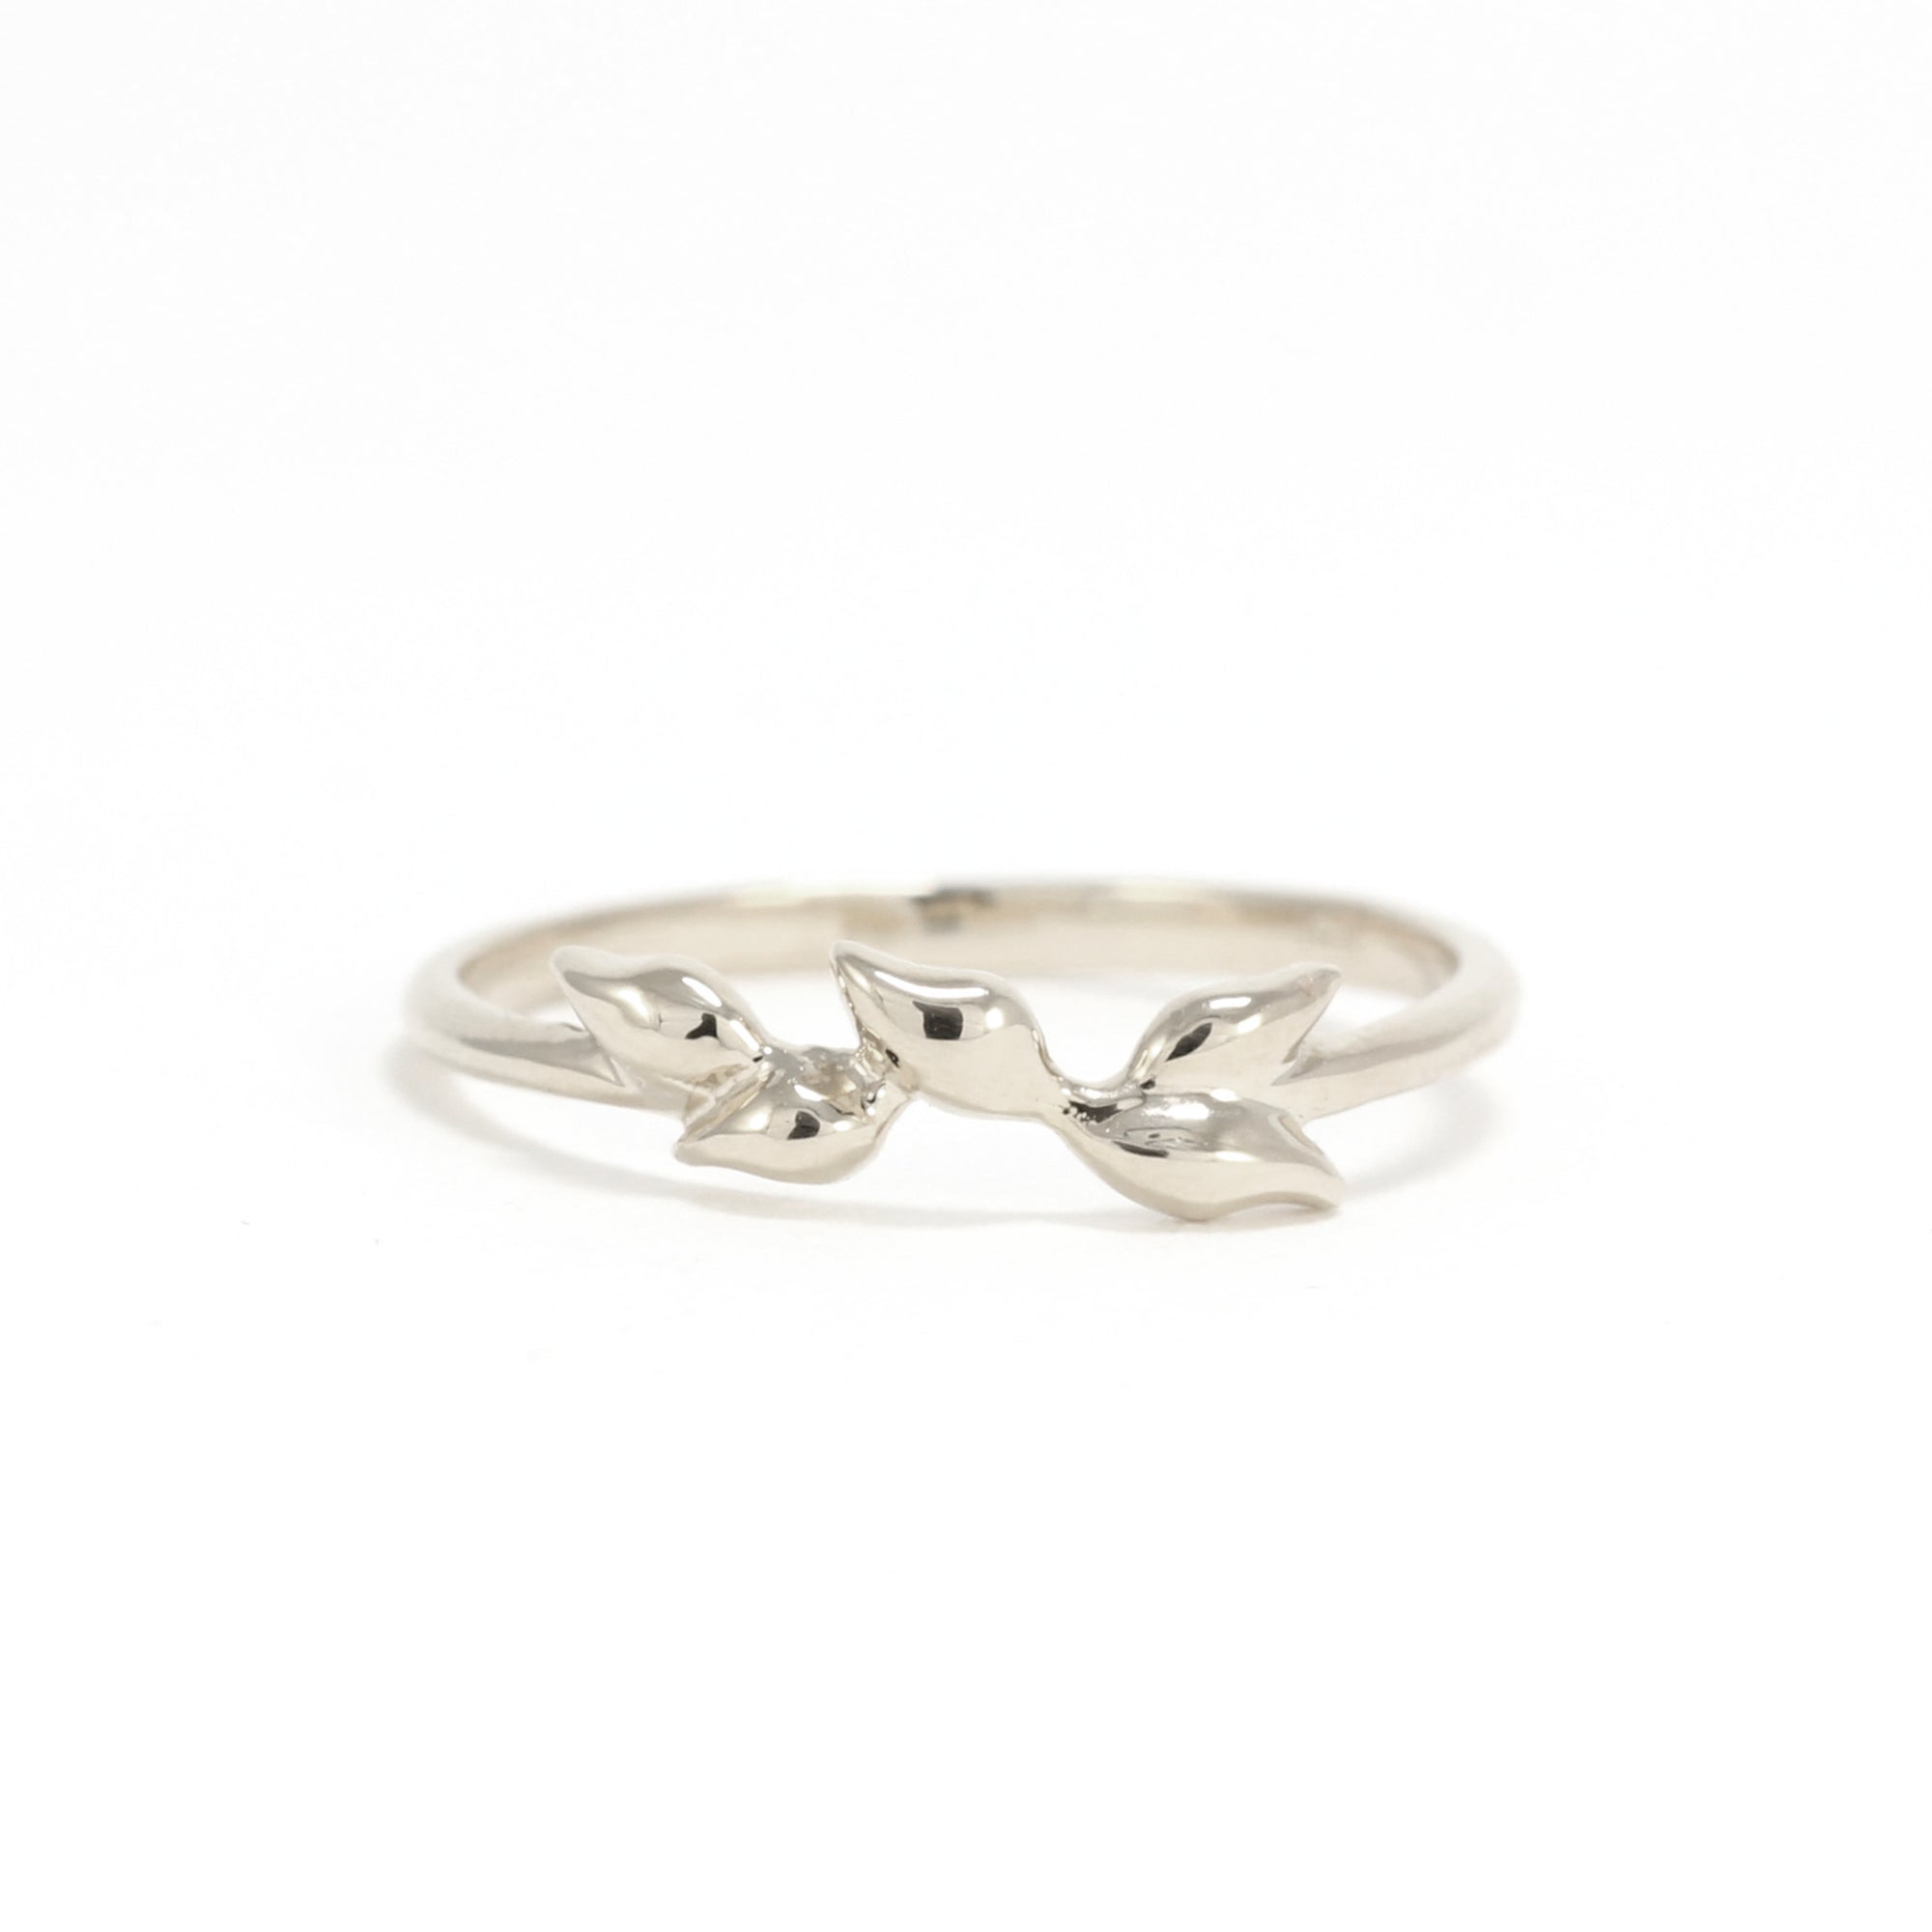 Artemis Ring in White Gold